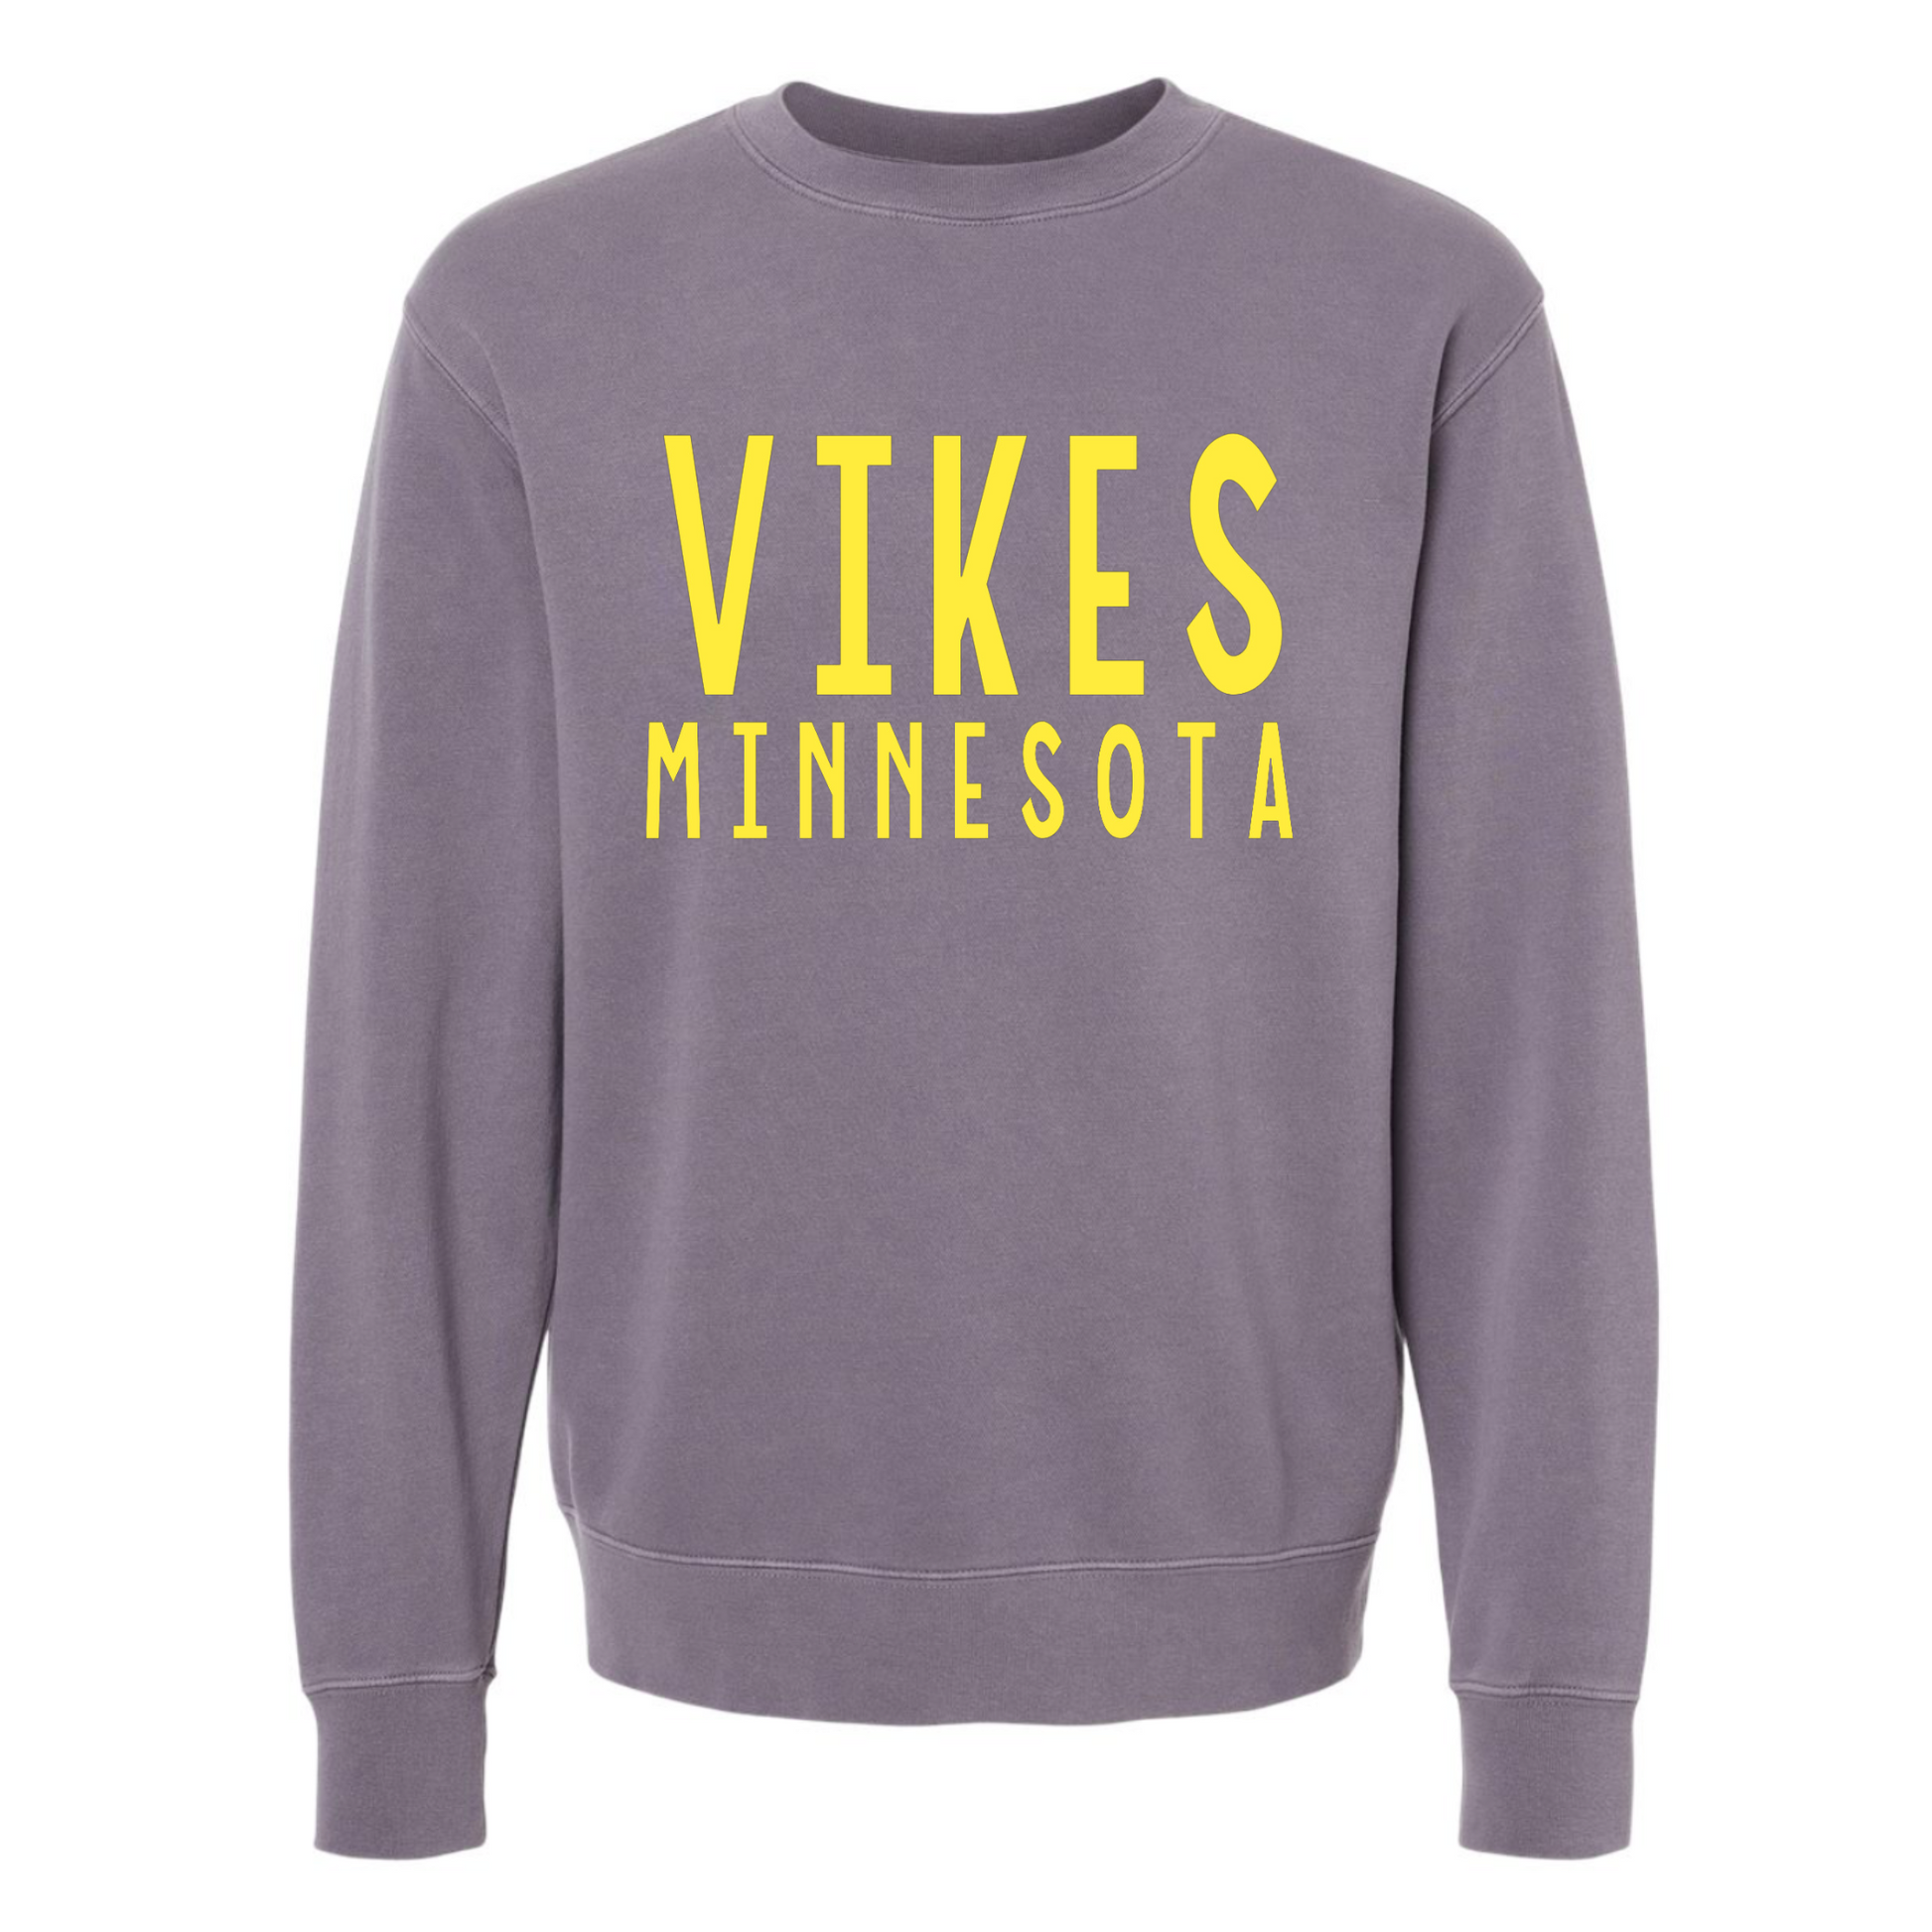 Minnesota Vikings Crewneck Sweatshirt - front view